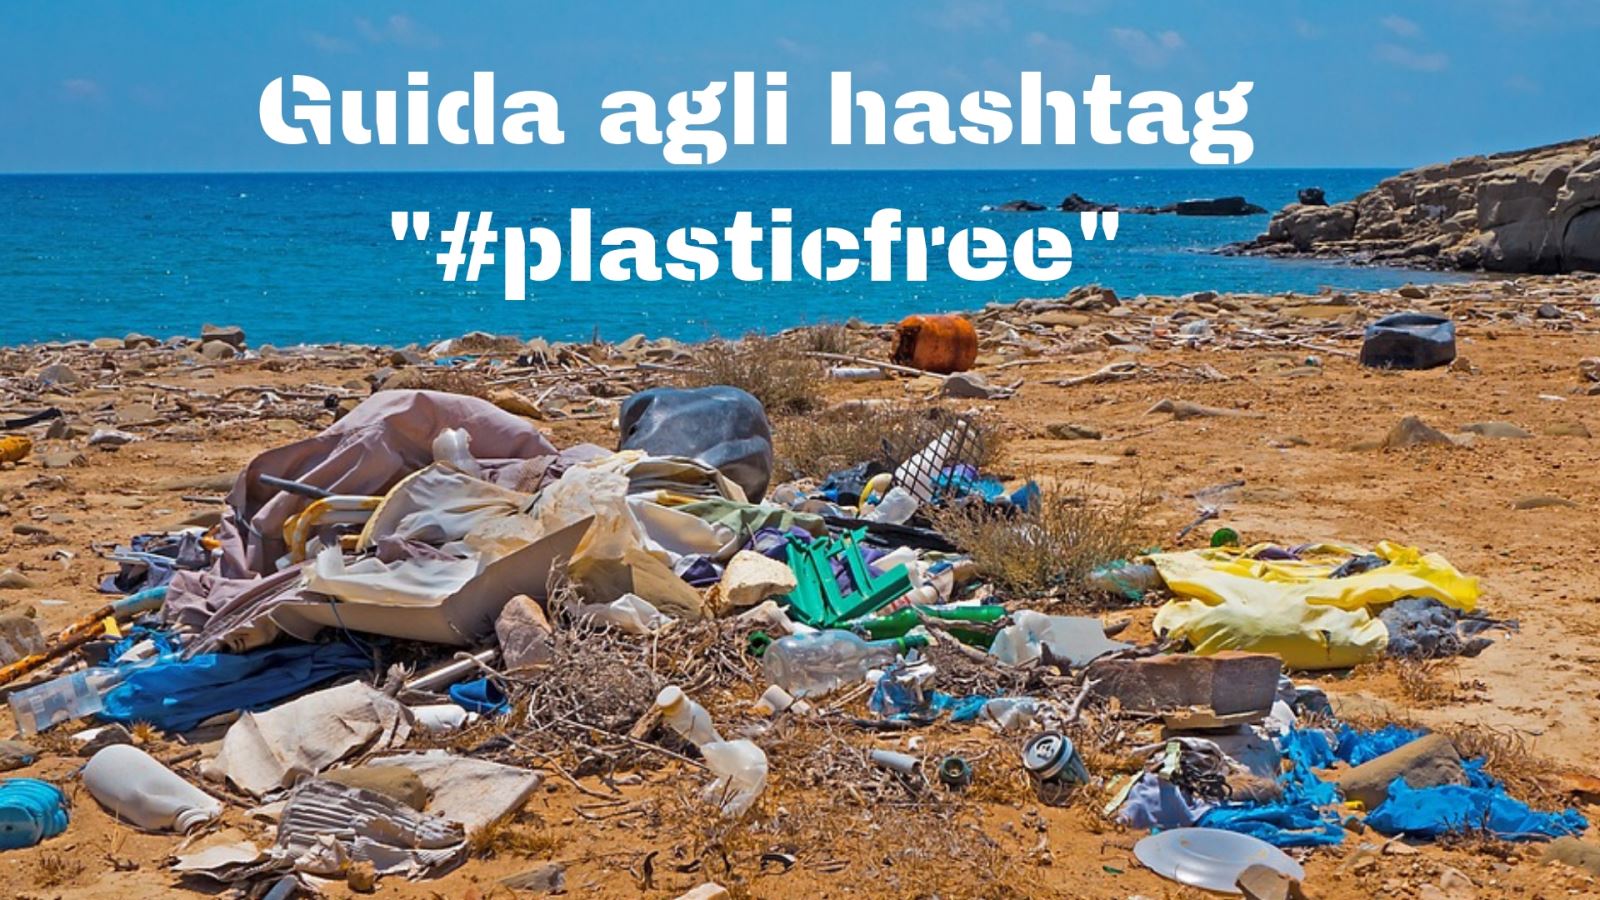 guida elenco hashtag plasticfree 2019